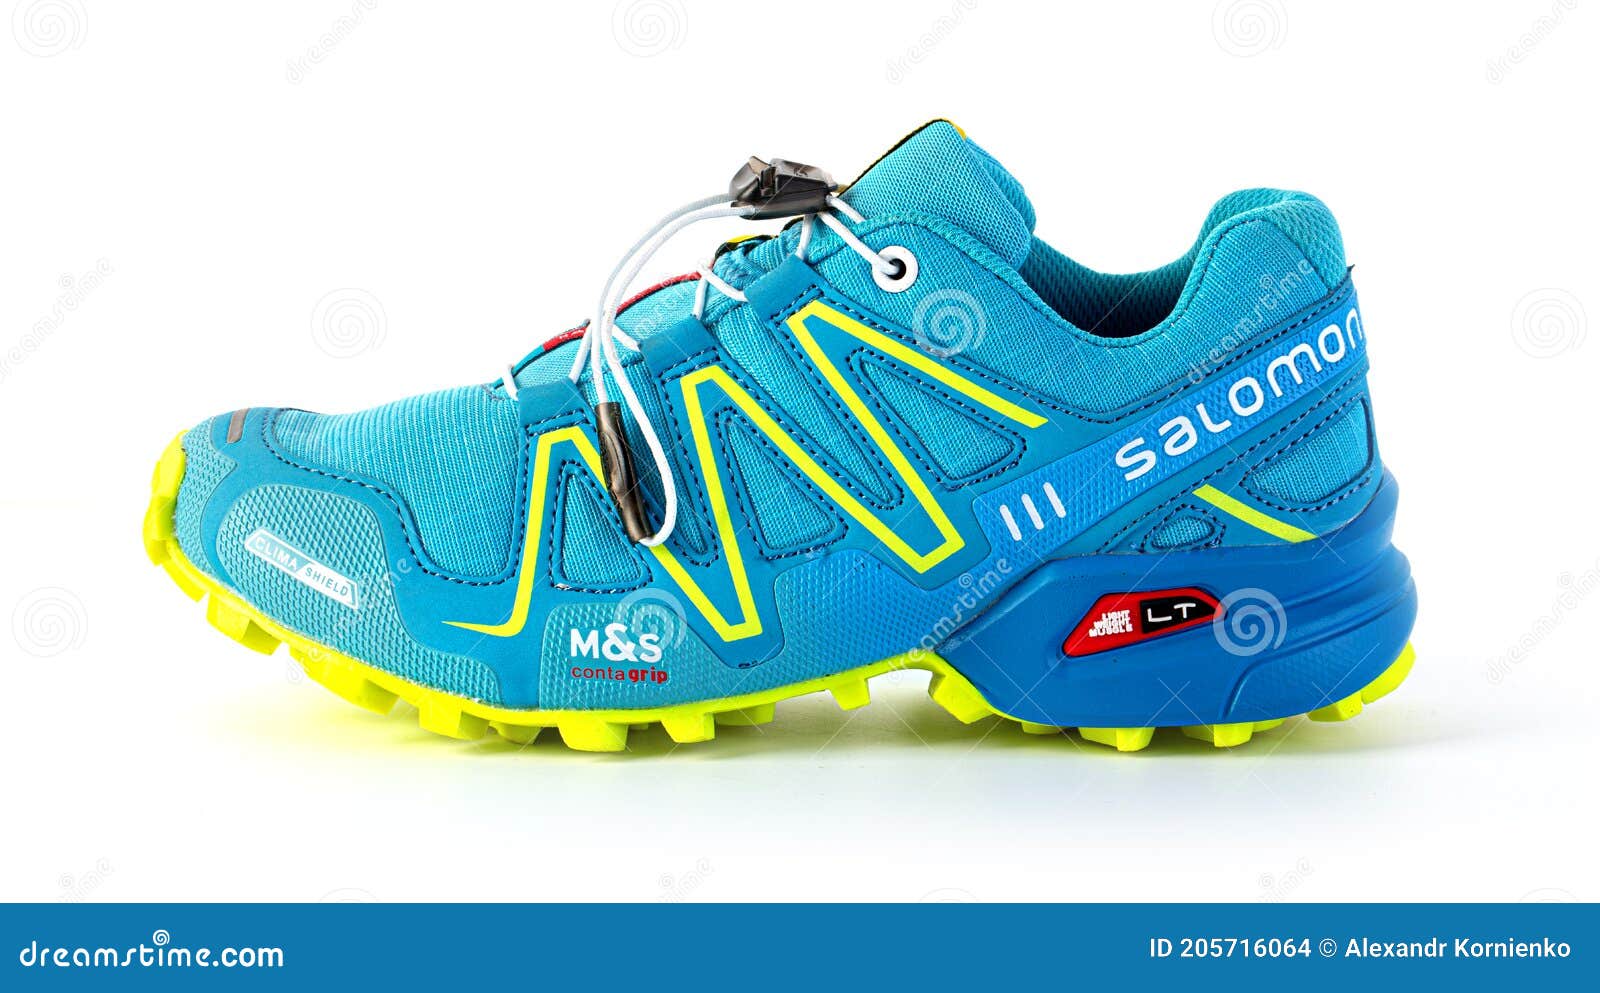 Salomon Sports Shoes on White Background Editorial Stock Image Image of health, mountain: 205716064